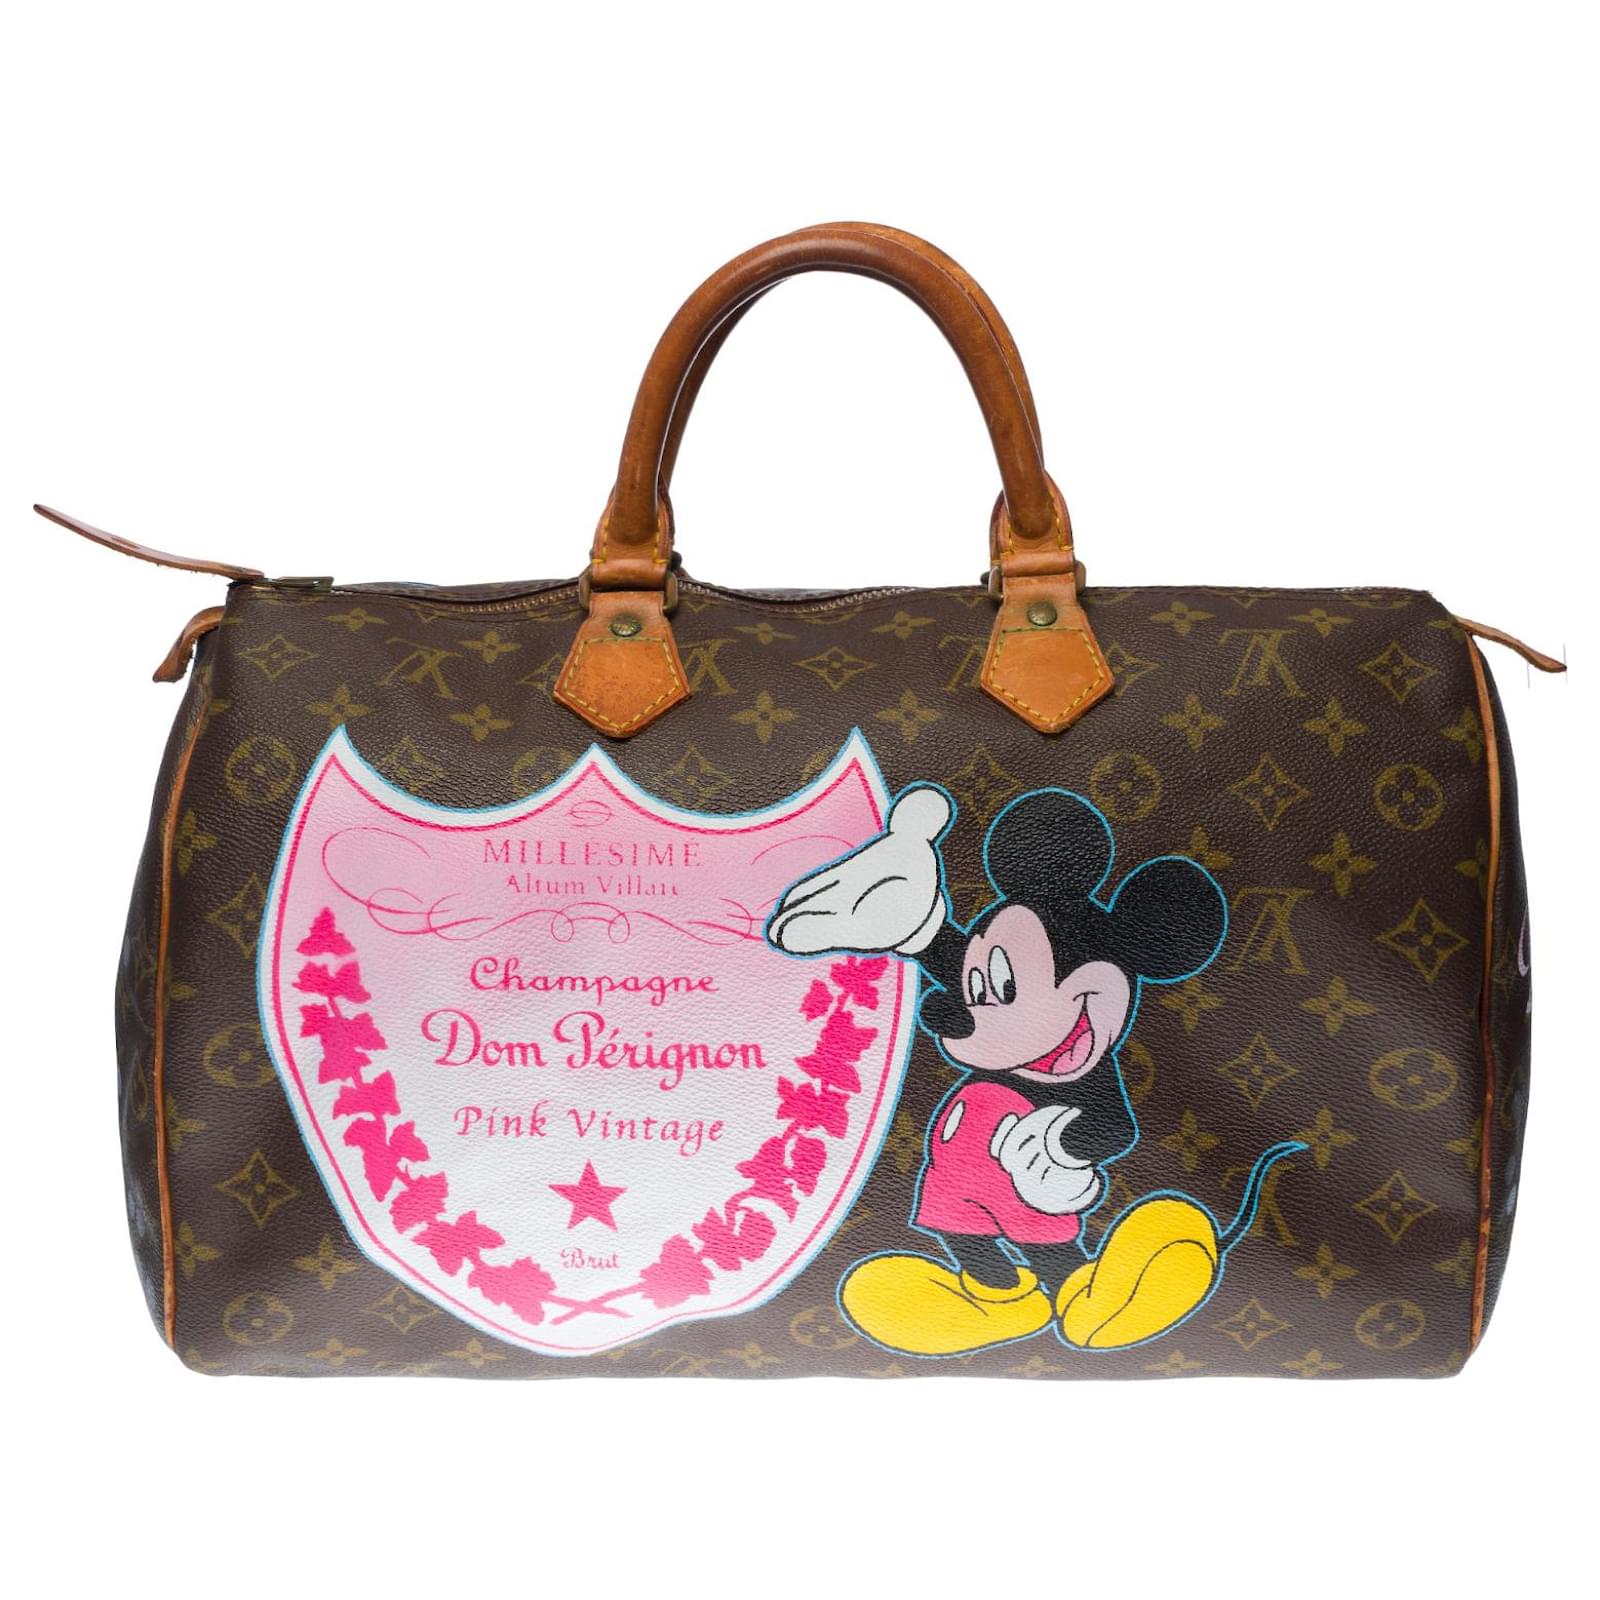 Handmade Mickey Mouse on Louis Vuitton Sac Plat bag  Painted bags,  Handpainted bags, Louis vuitton sac plat